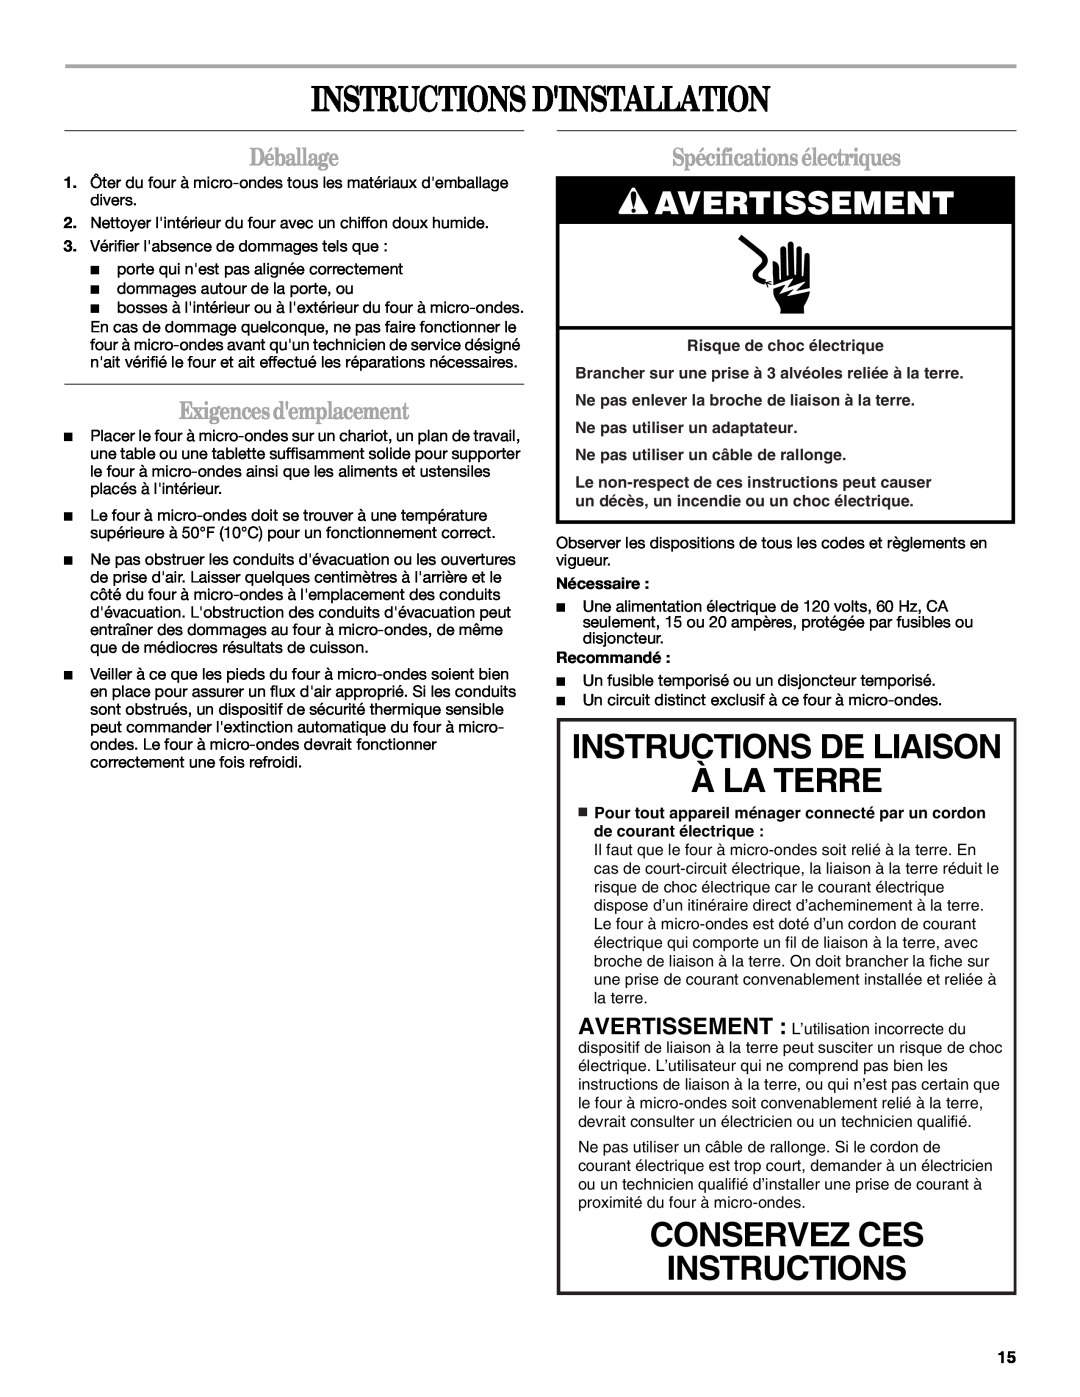 Whirlpool WMC1070 Instructions Dinstallation, Avertissement, Déballage, Exigencesdemplacement, Spécificationsélectriques 